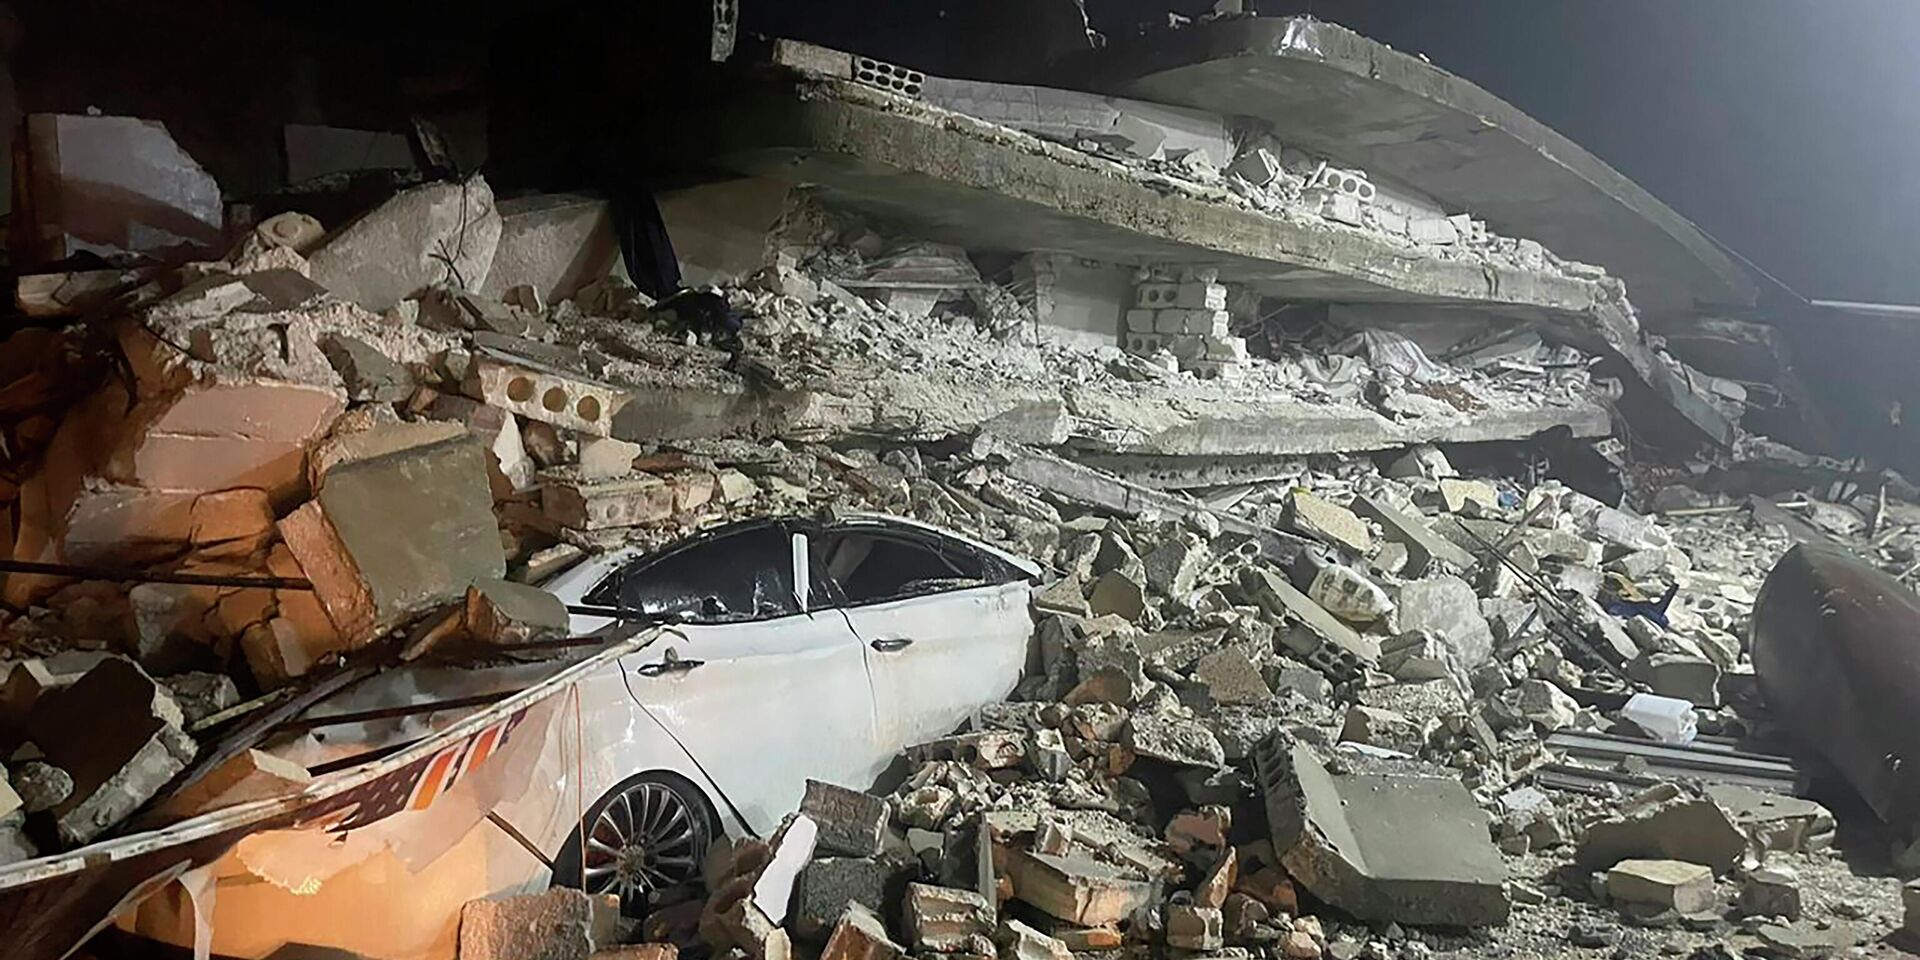 Последствия землетрясения в городе Азмарин, провинция Идлиб, Сирия. 6 февраля 2023 года - ИноСМИ, 1920, 06.02.2023